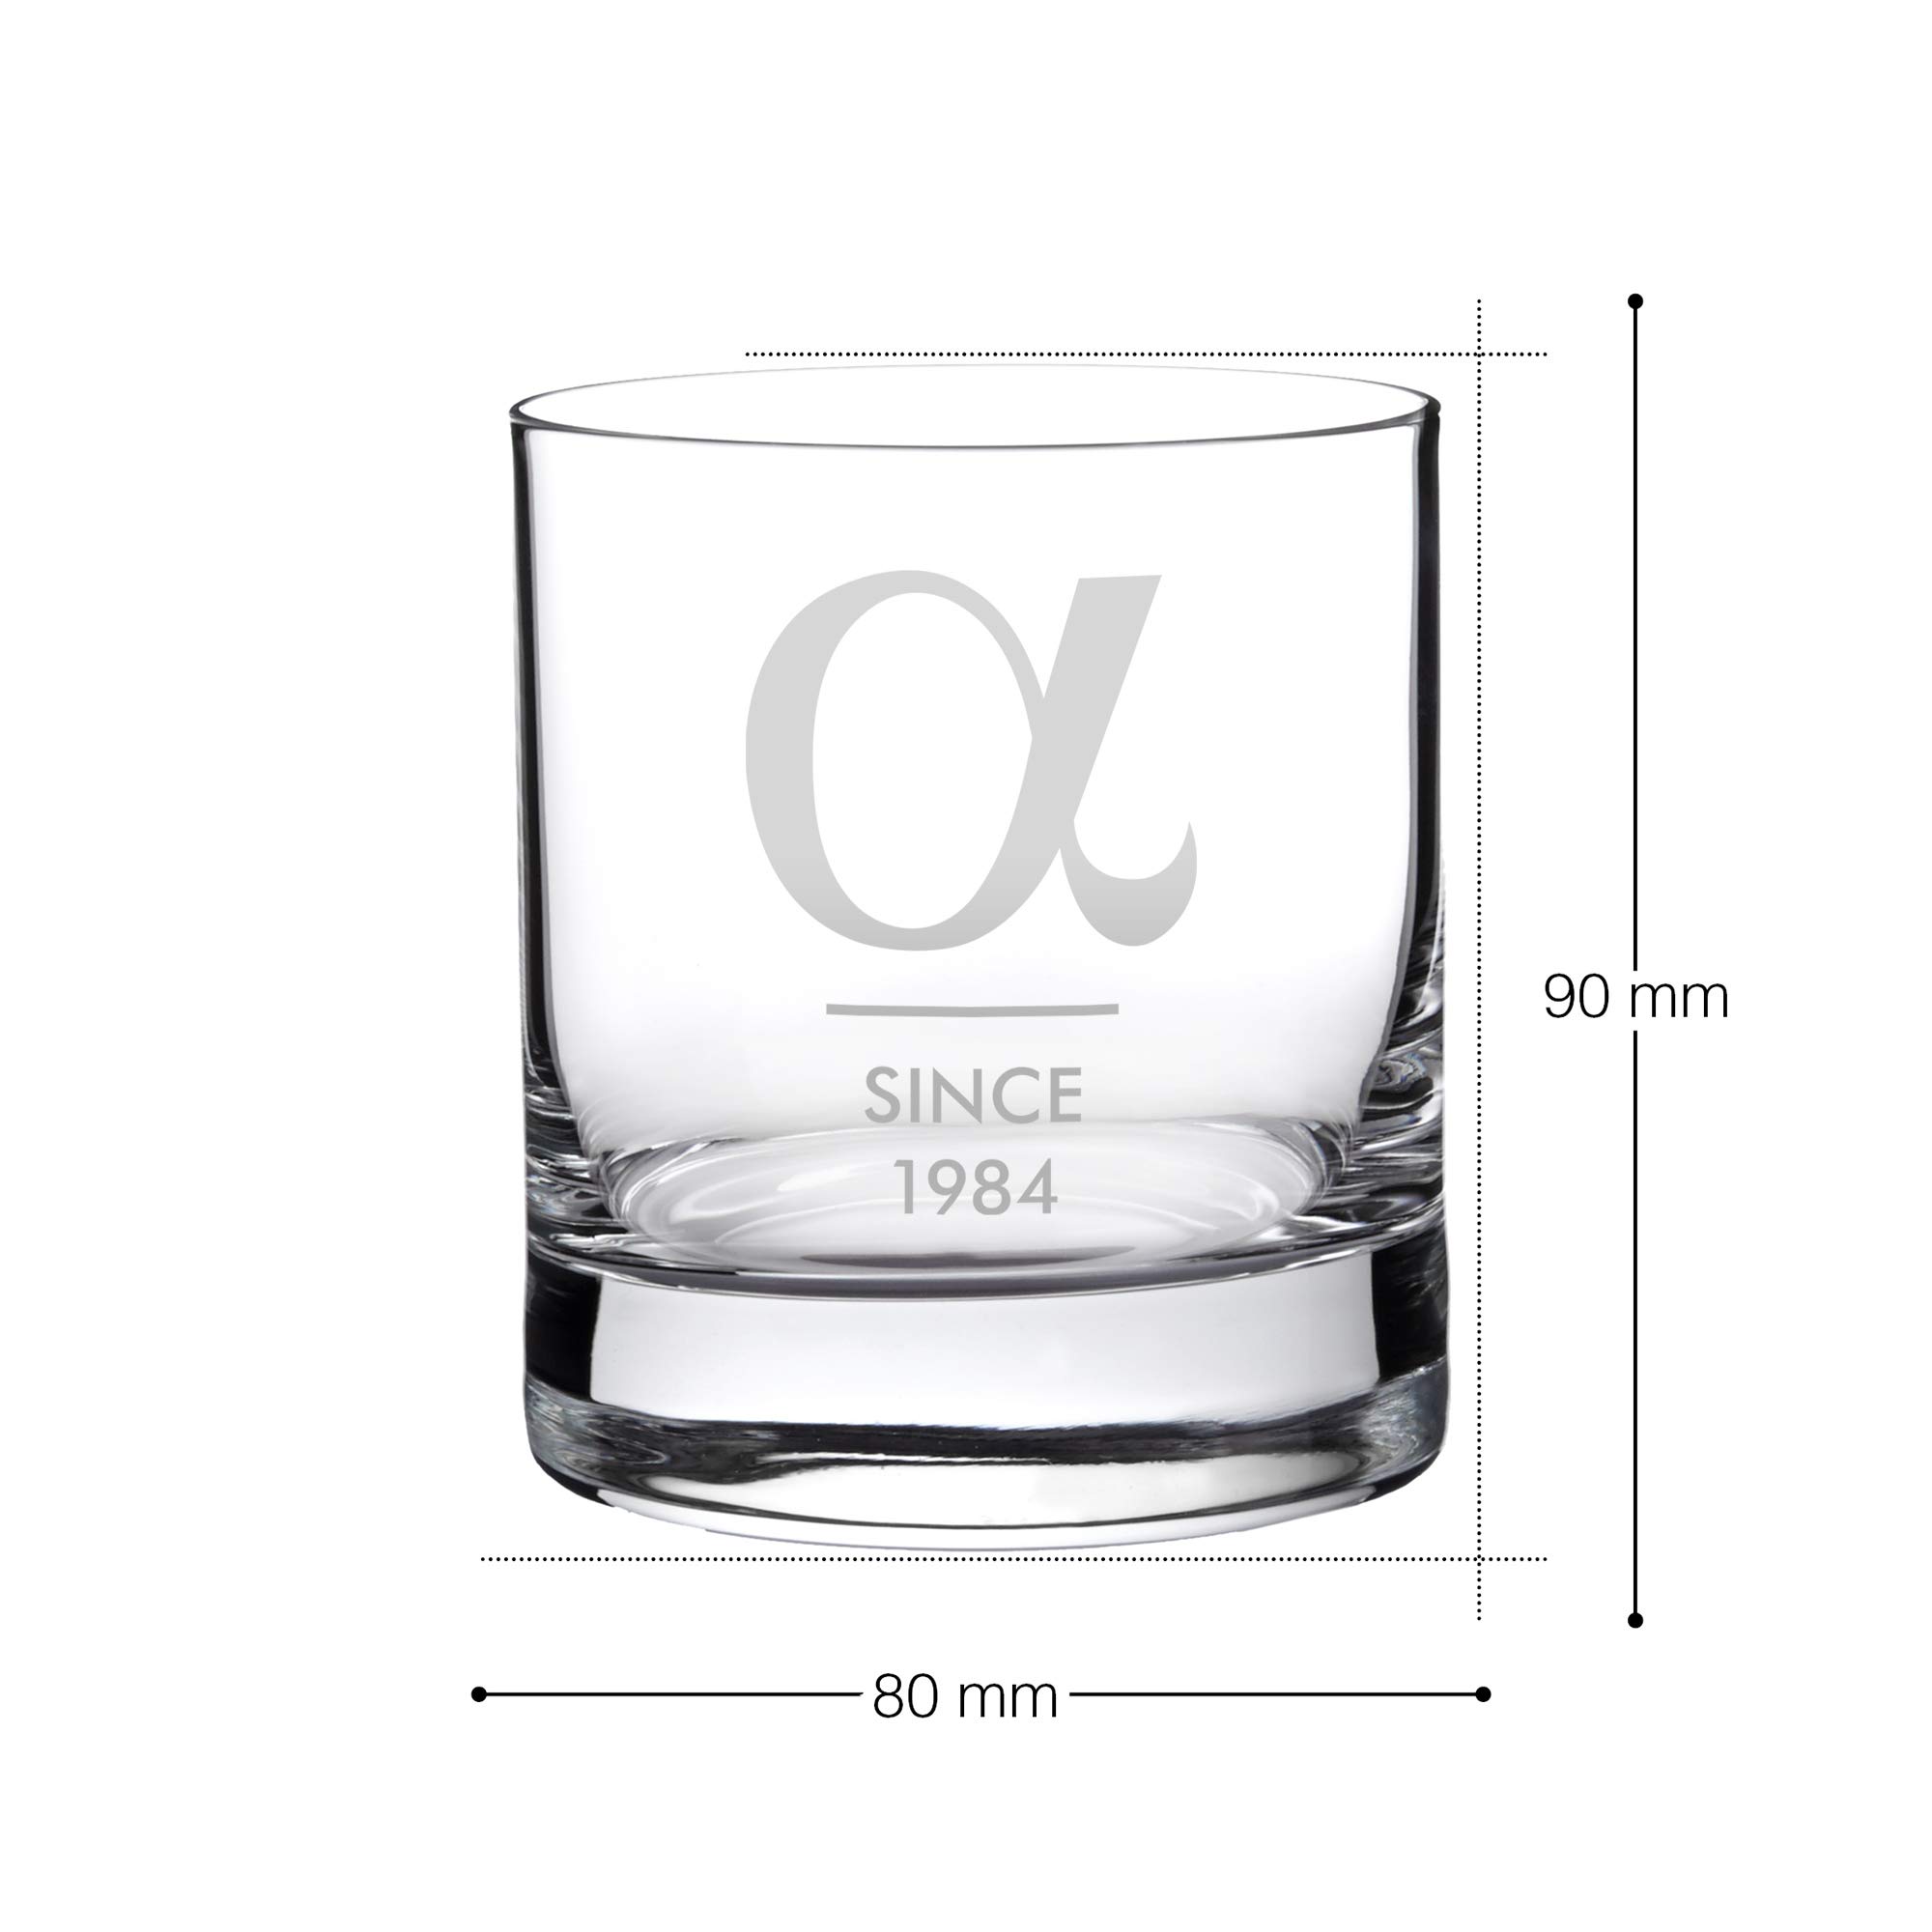 Graviertes Whiskyglas - Alpha - Personalisiert, Graviertes Whiskyglas - Alpha - Personalisiert, Whiskyglas gravieren, Personalisierte Geschenke, whisk